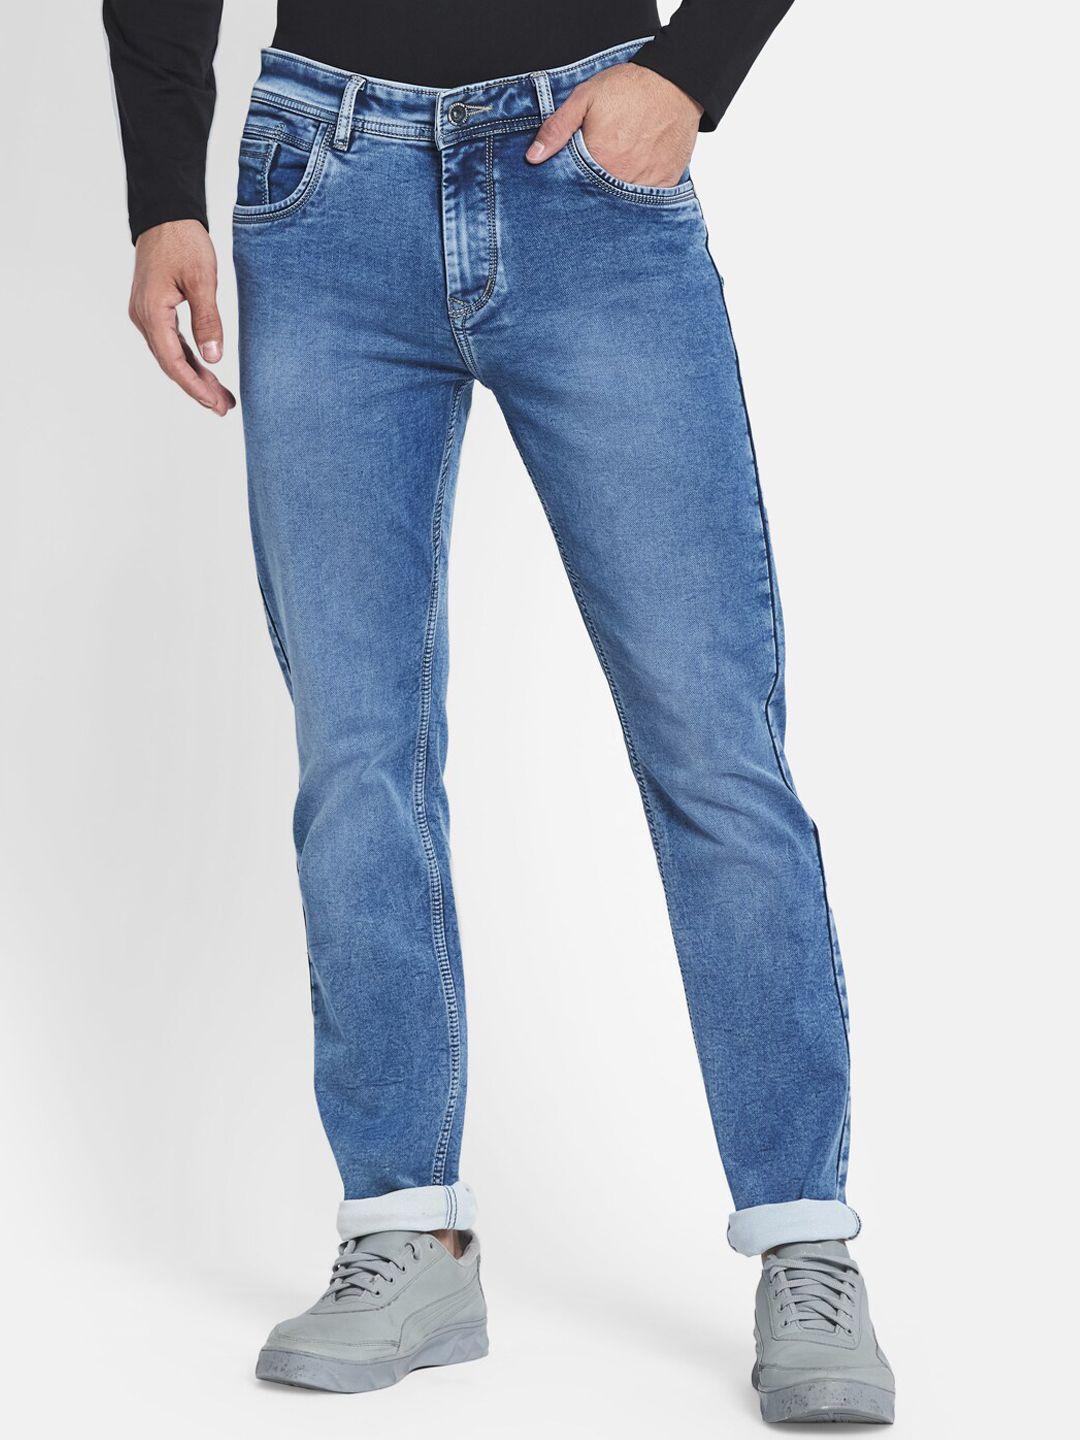 octave men blue stretchable mid-rise jeans